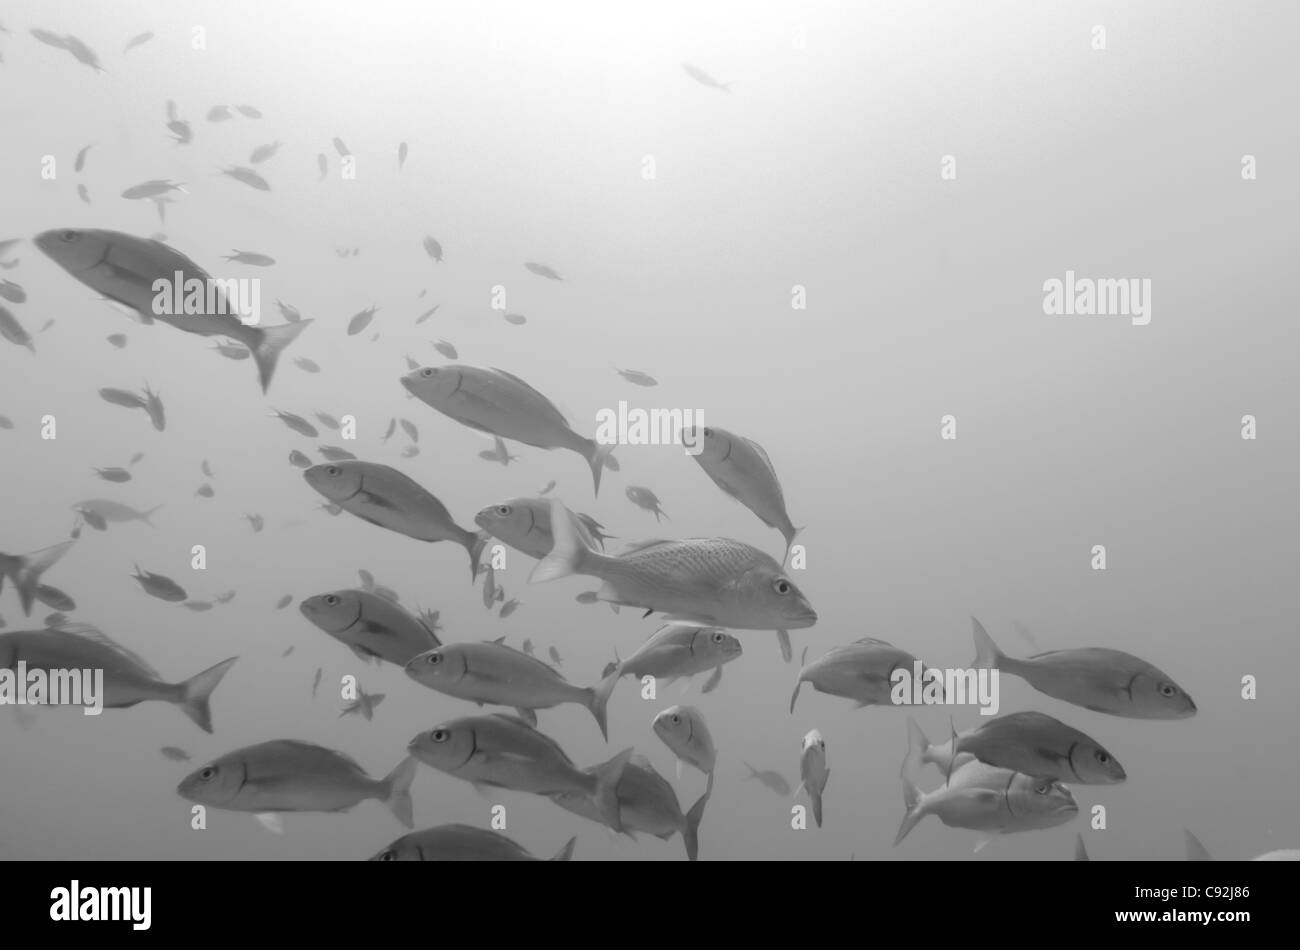 School of fish swimming underwater, Santa Cruz Island, Galapagos Islands, Ecuador Stock Photo